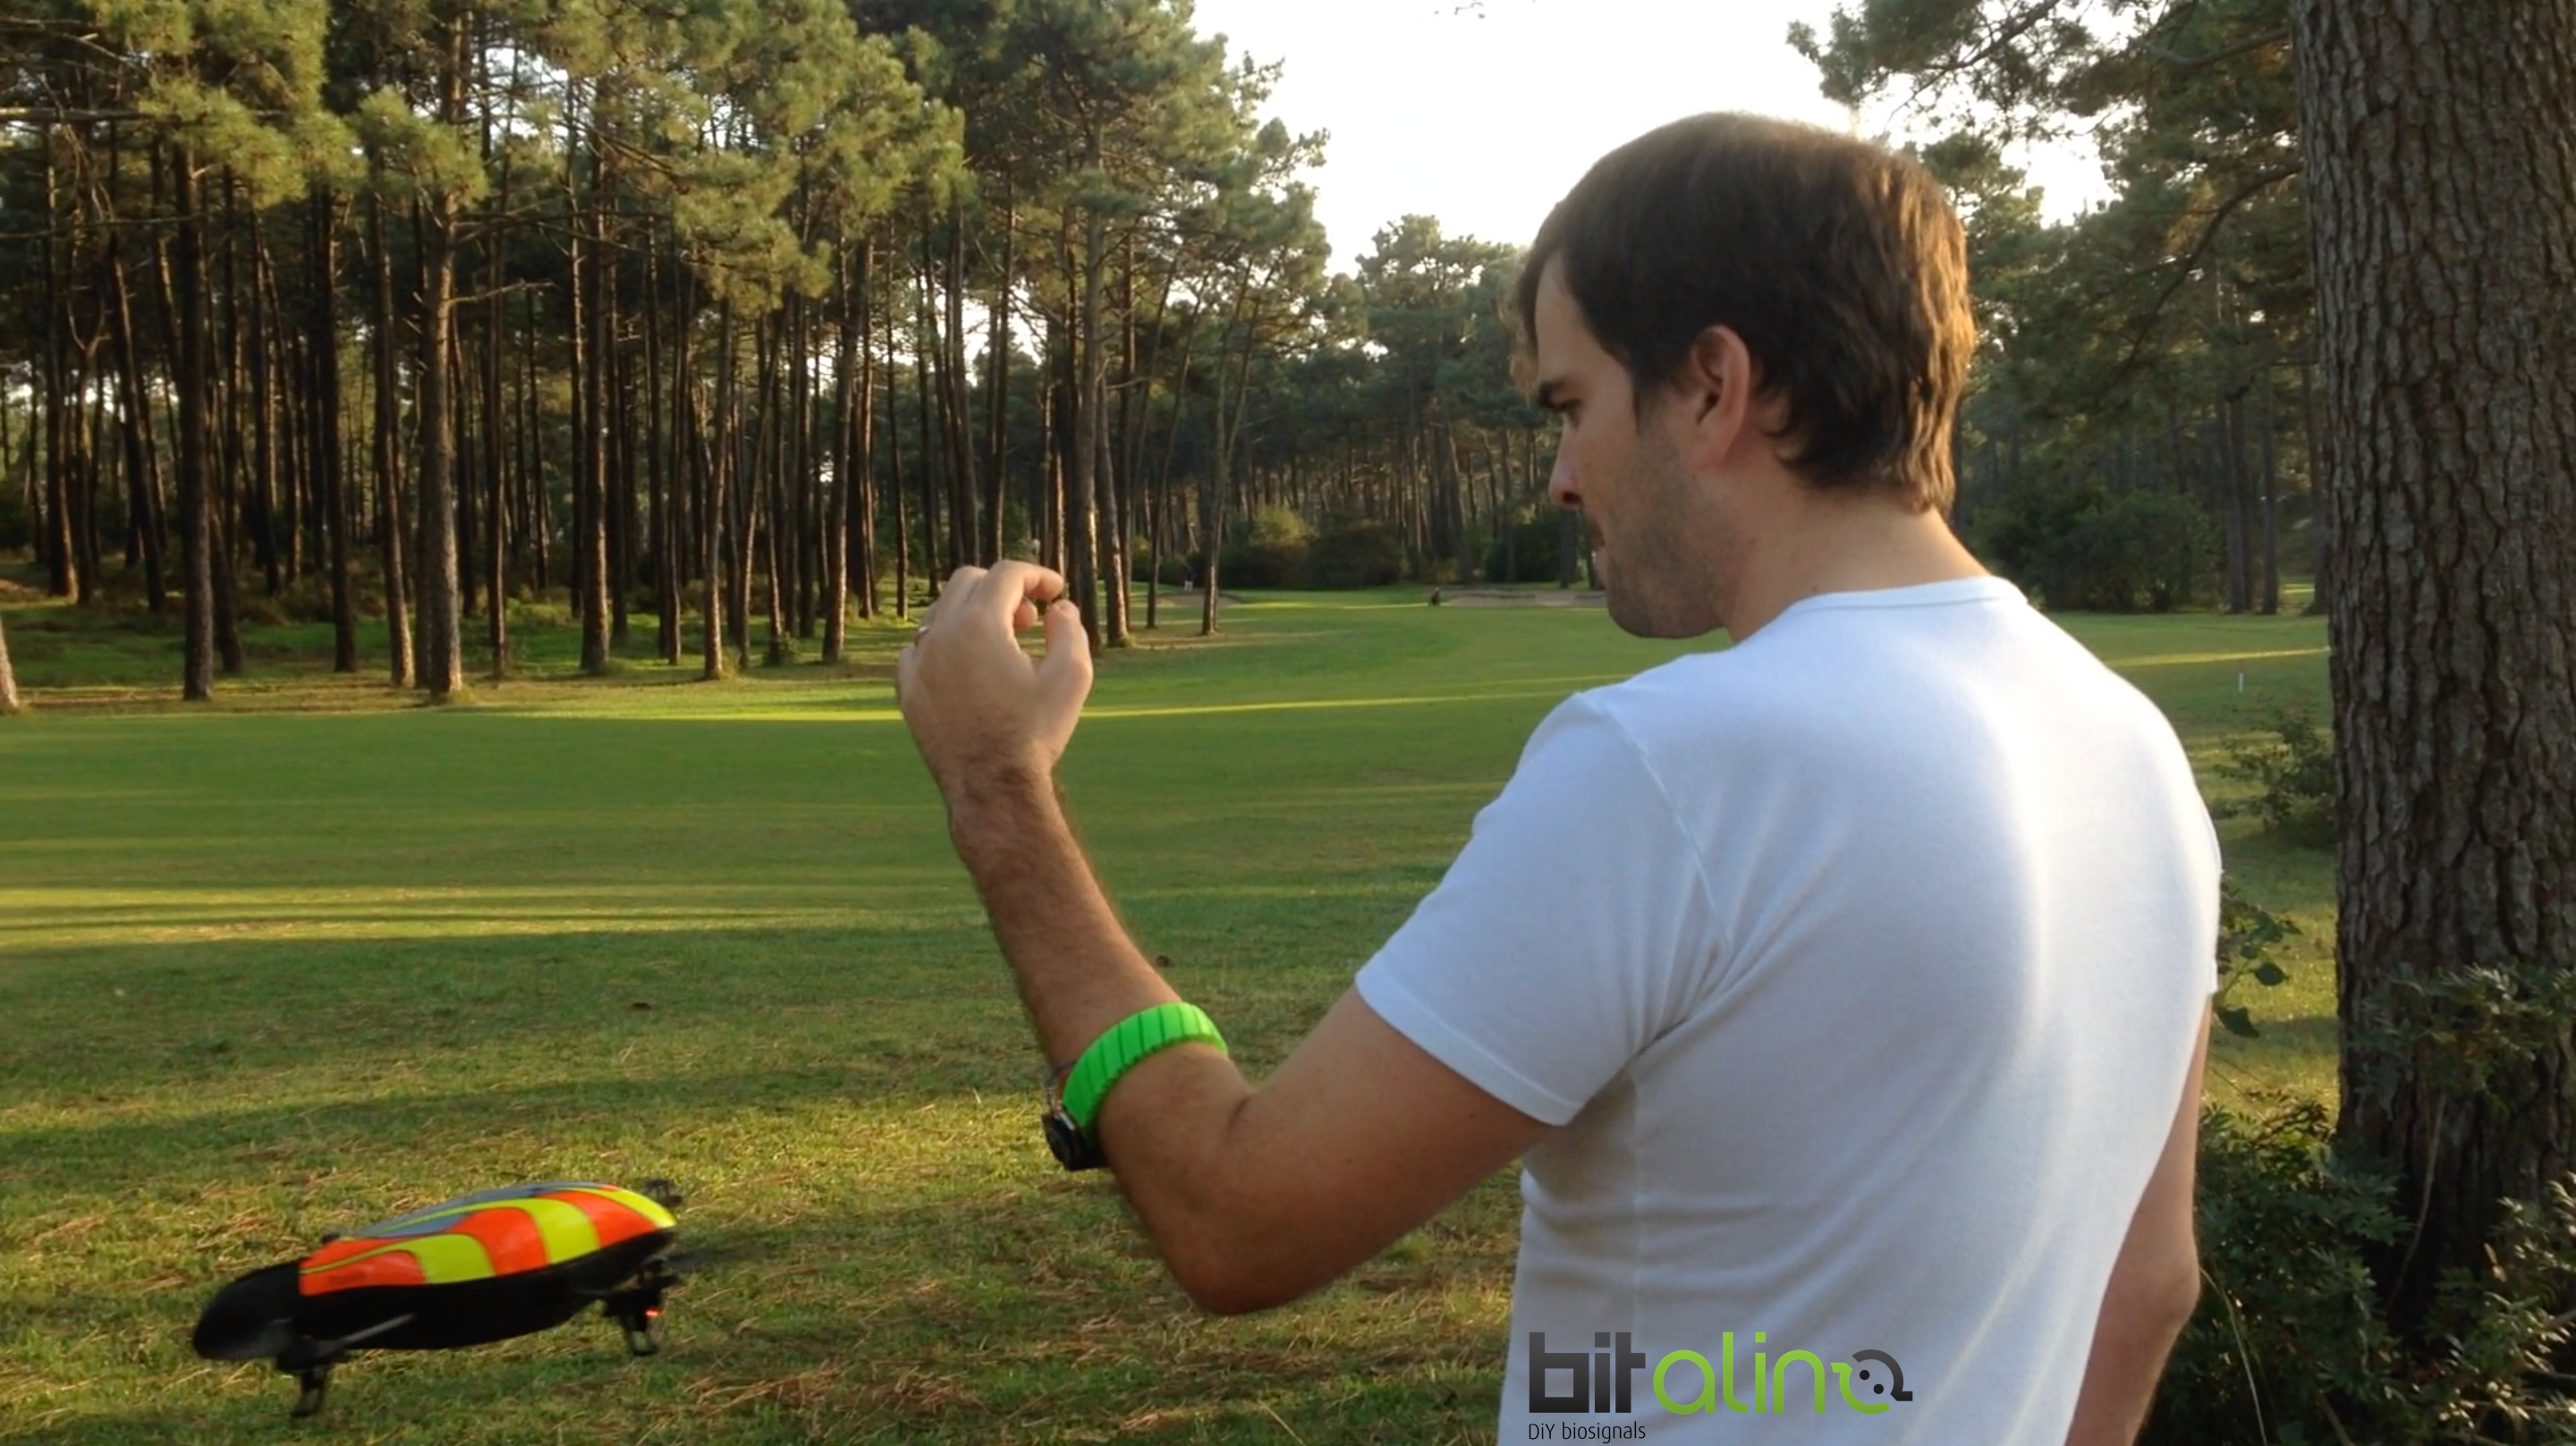 BITalino arm sensor for drone